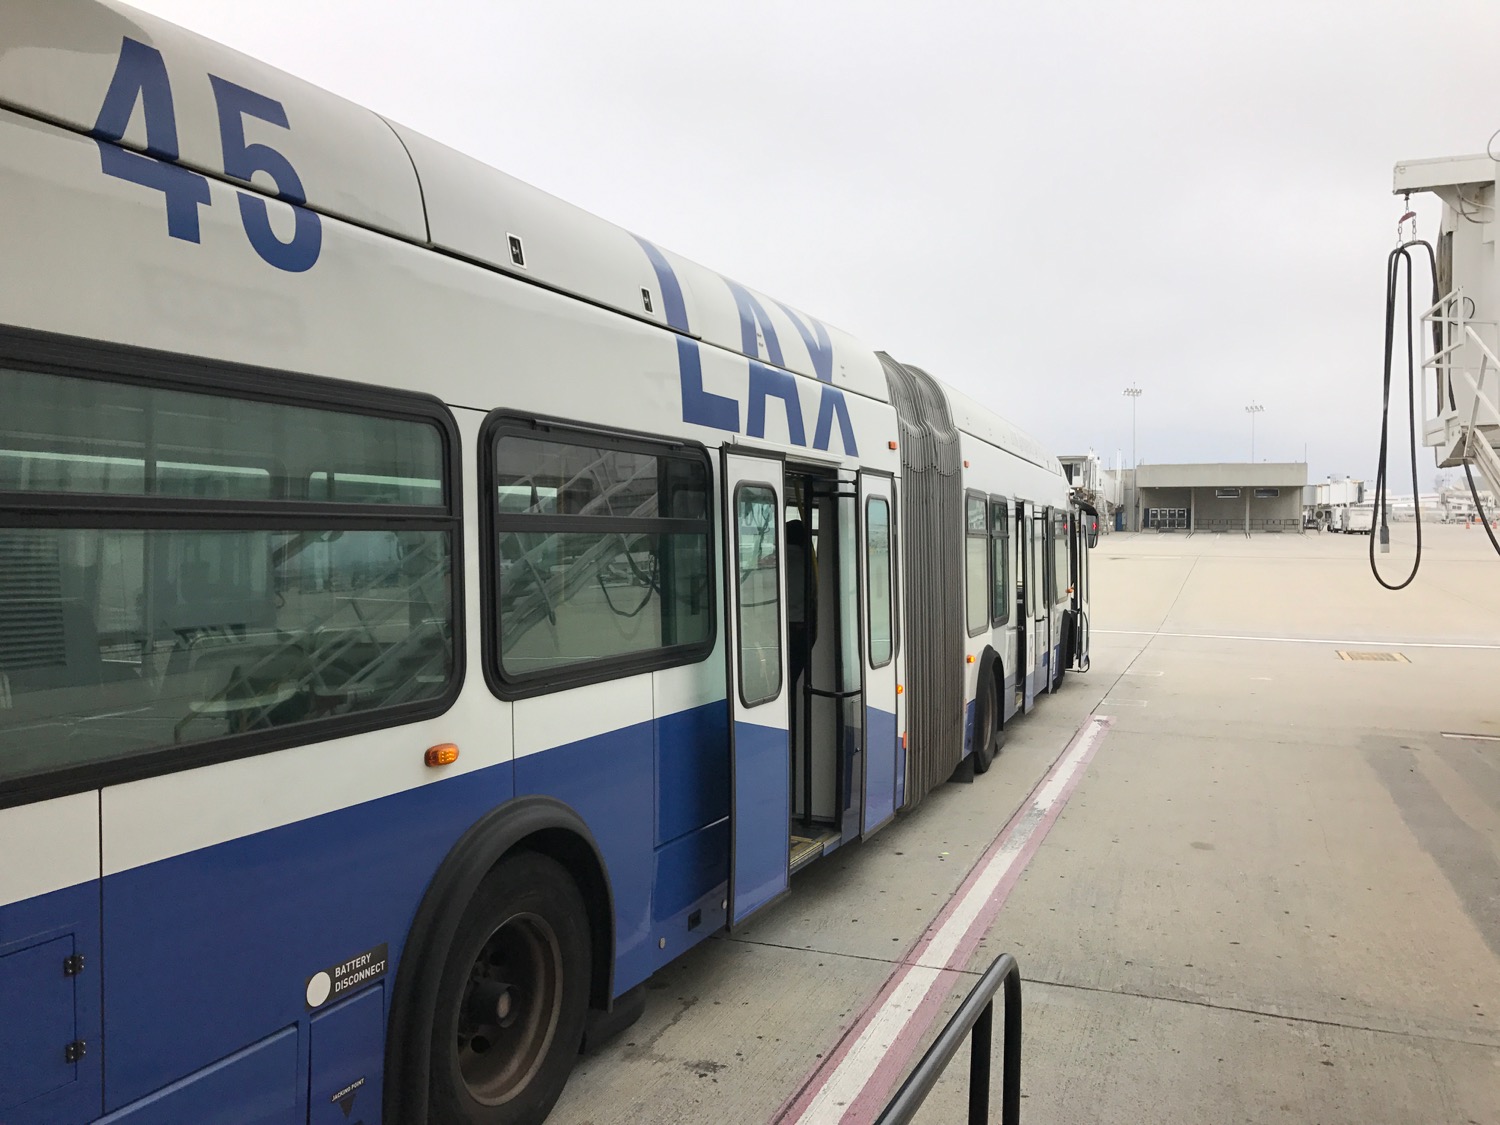 a bus parked on a concrete surface